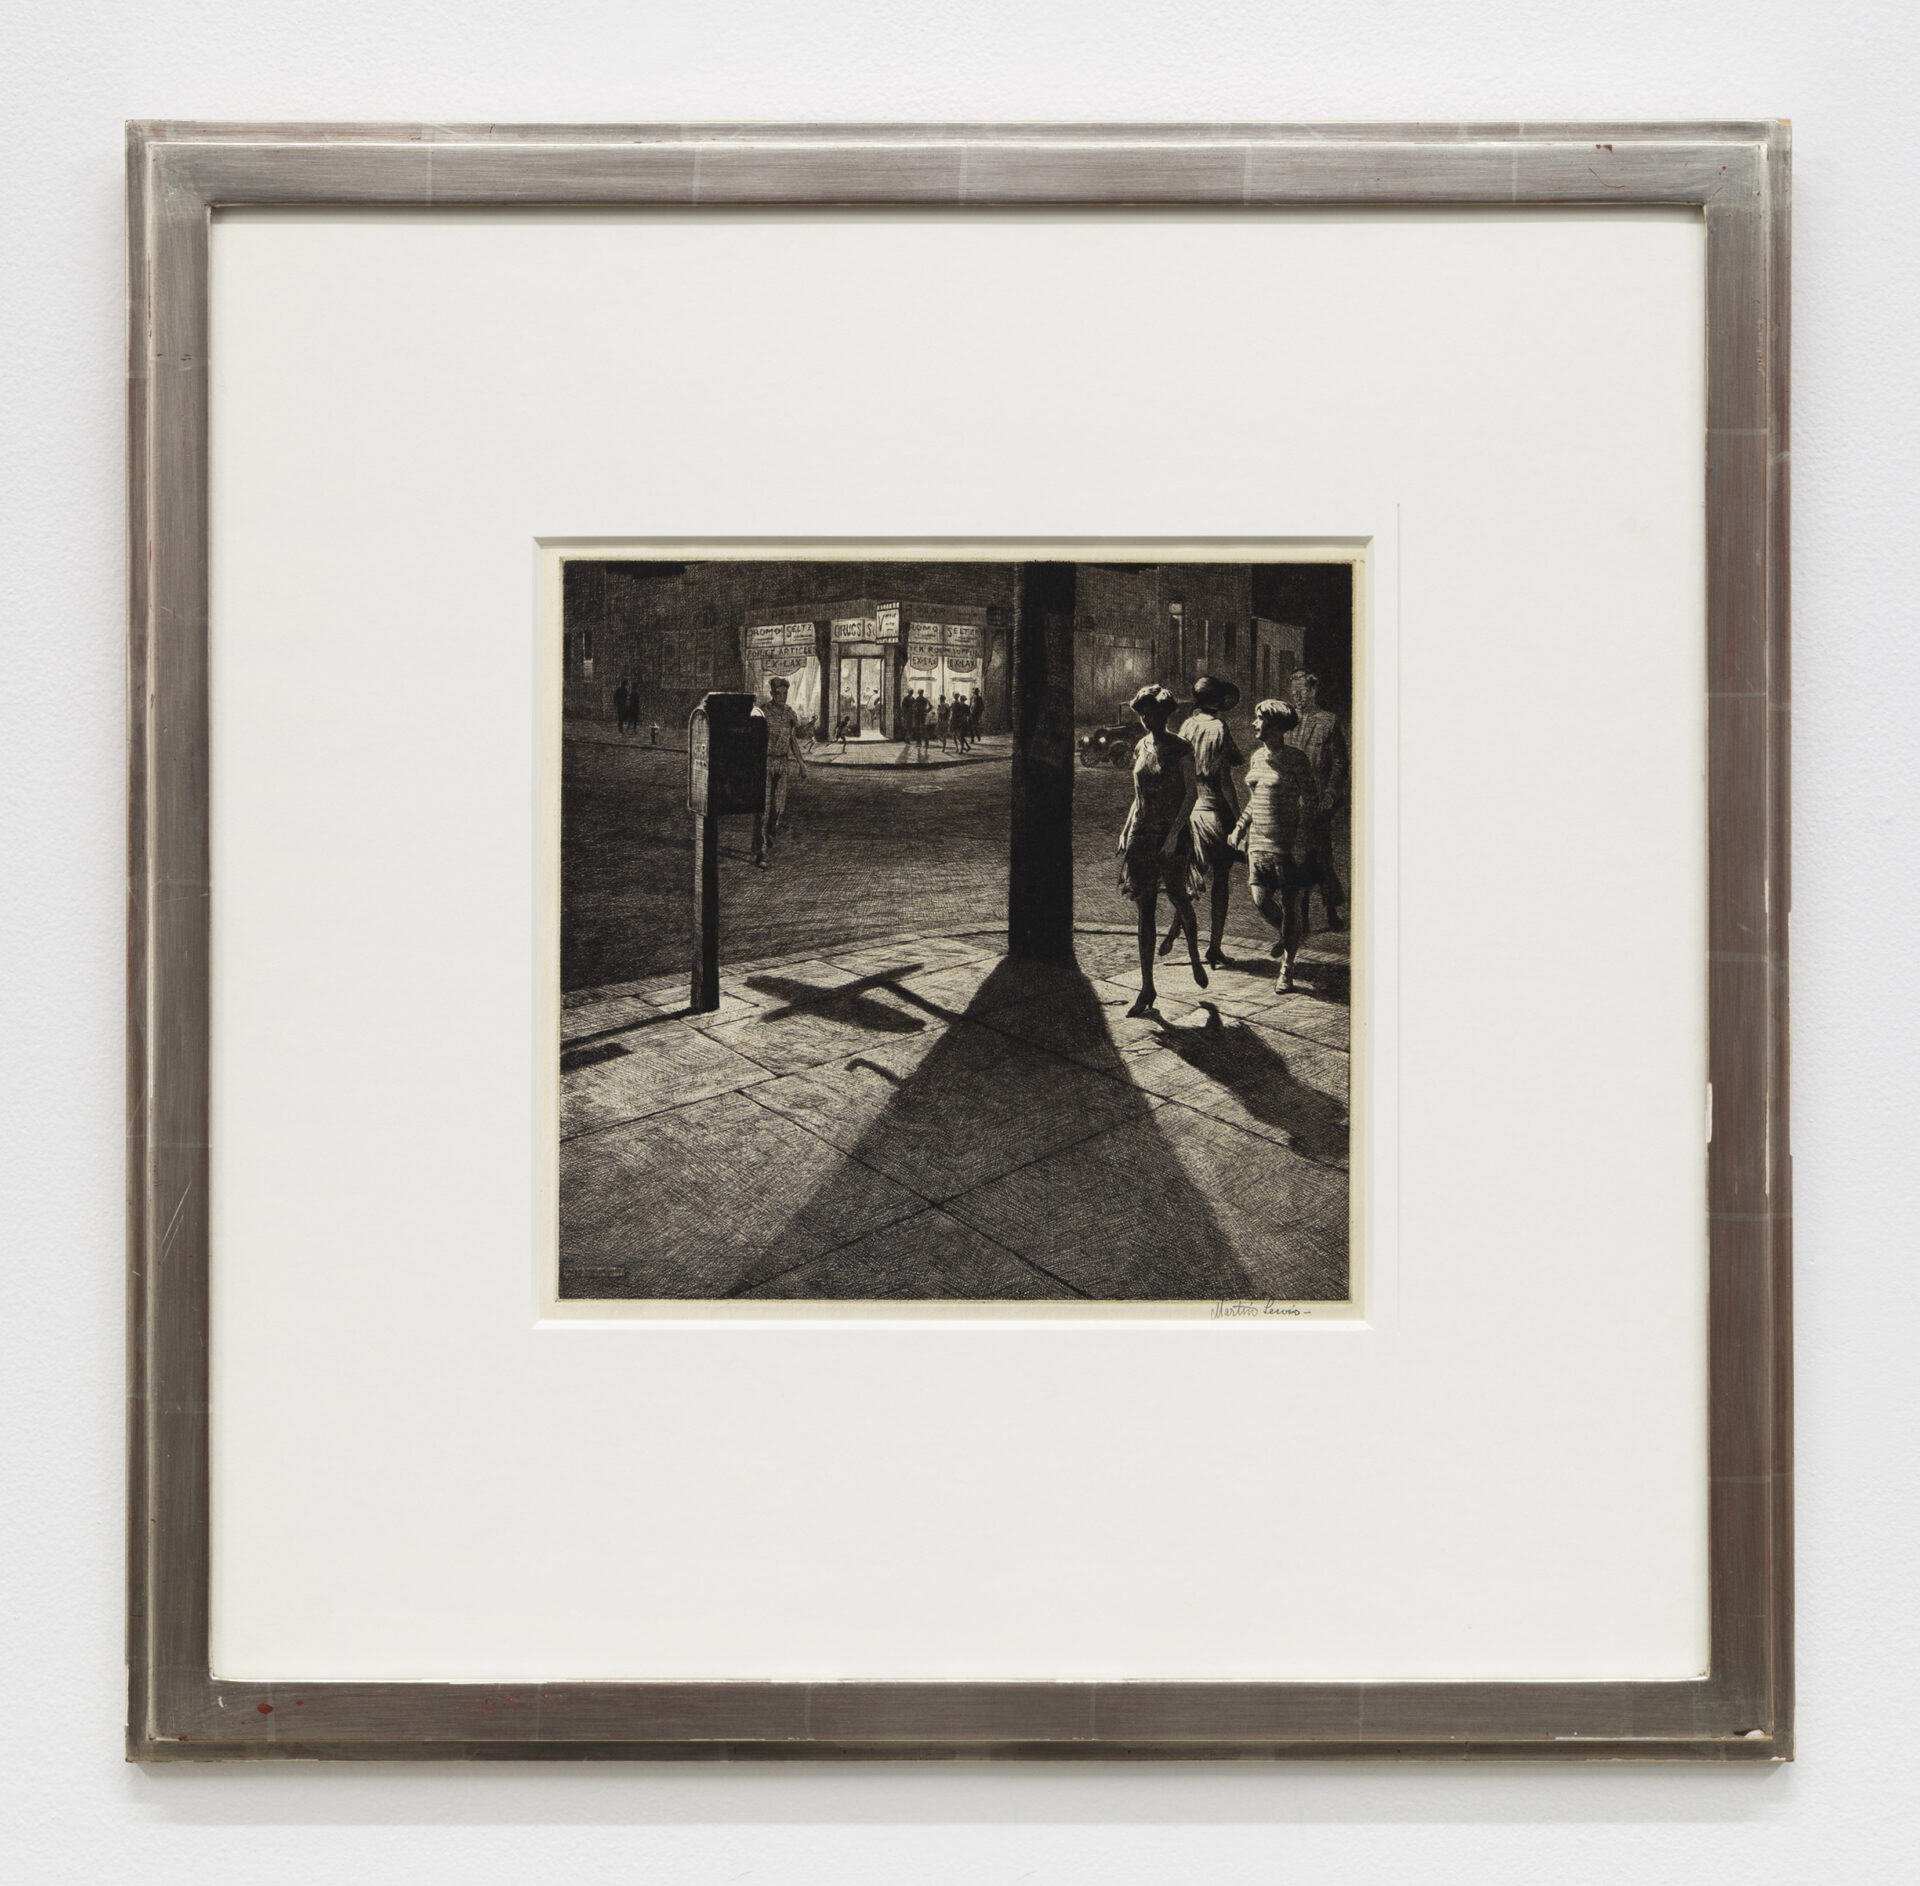 Martin Lewis Corner Shadows, 1930 Drypoint Paper Dimensions: 10 7/8 x 12 1/8 inches (27.6 x 30.8 cm) Image Dimensions: 8 3/8 x 8 15/16 inches (21.3 x 22.7 cm) Framed Dimensions: 16 x 16 inches (40.6 x 40.6 cm) Edition of 242